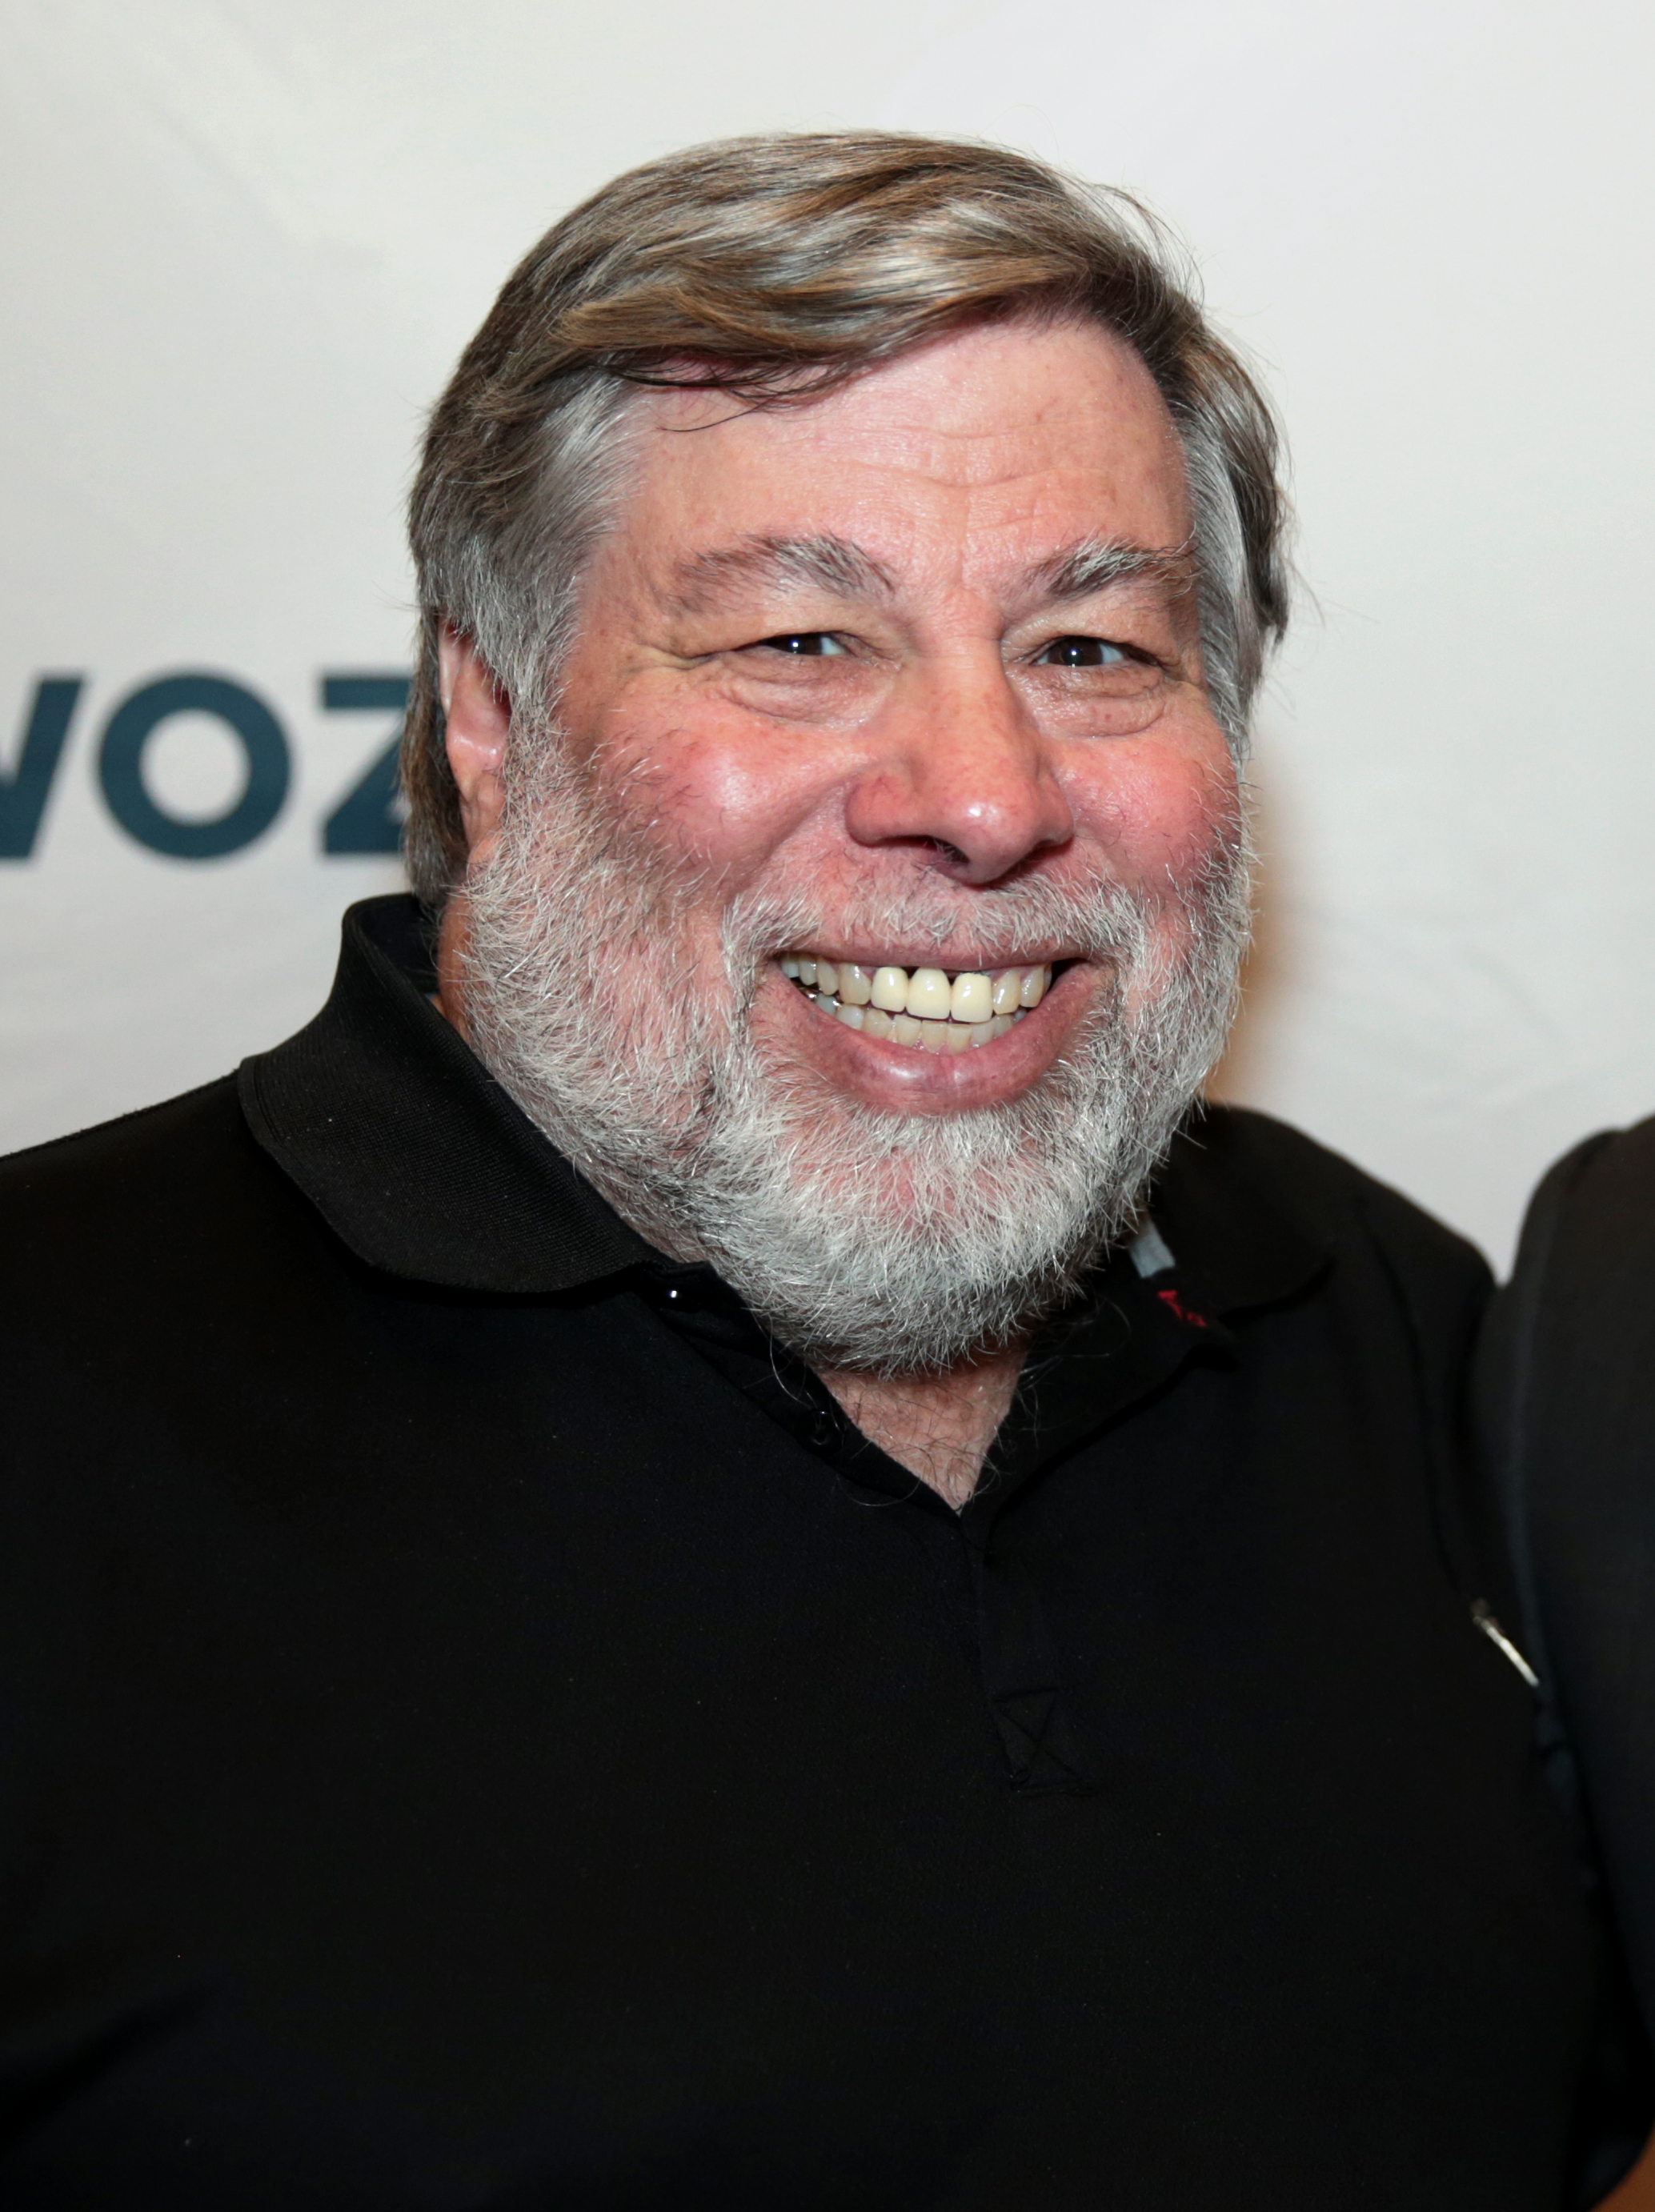 Steve Wozniak photo #107144, Steve Wozniak image